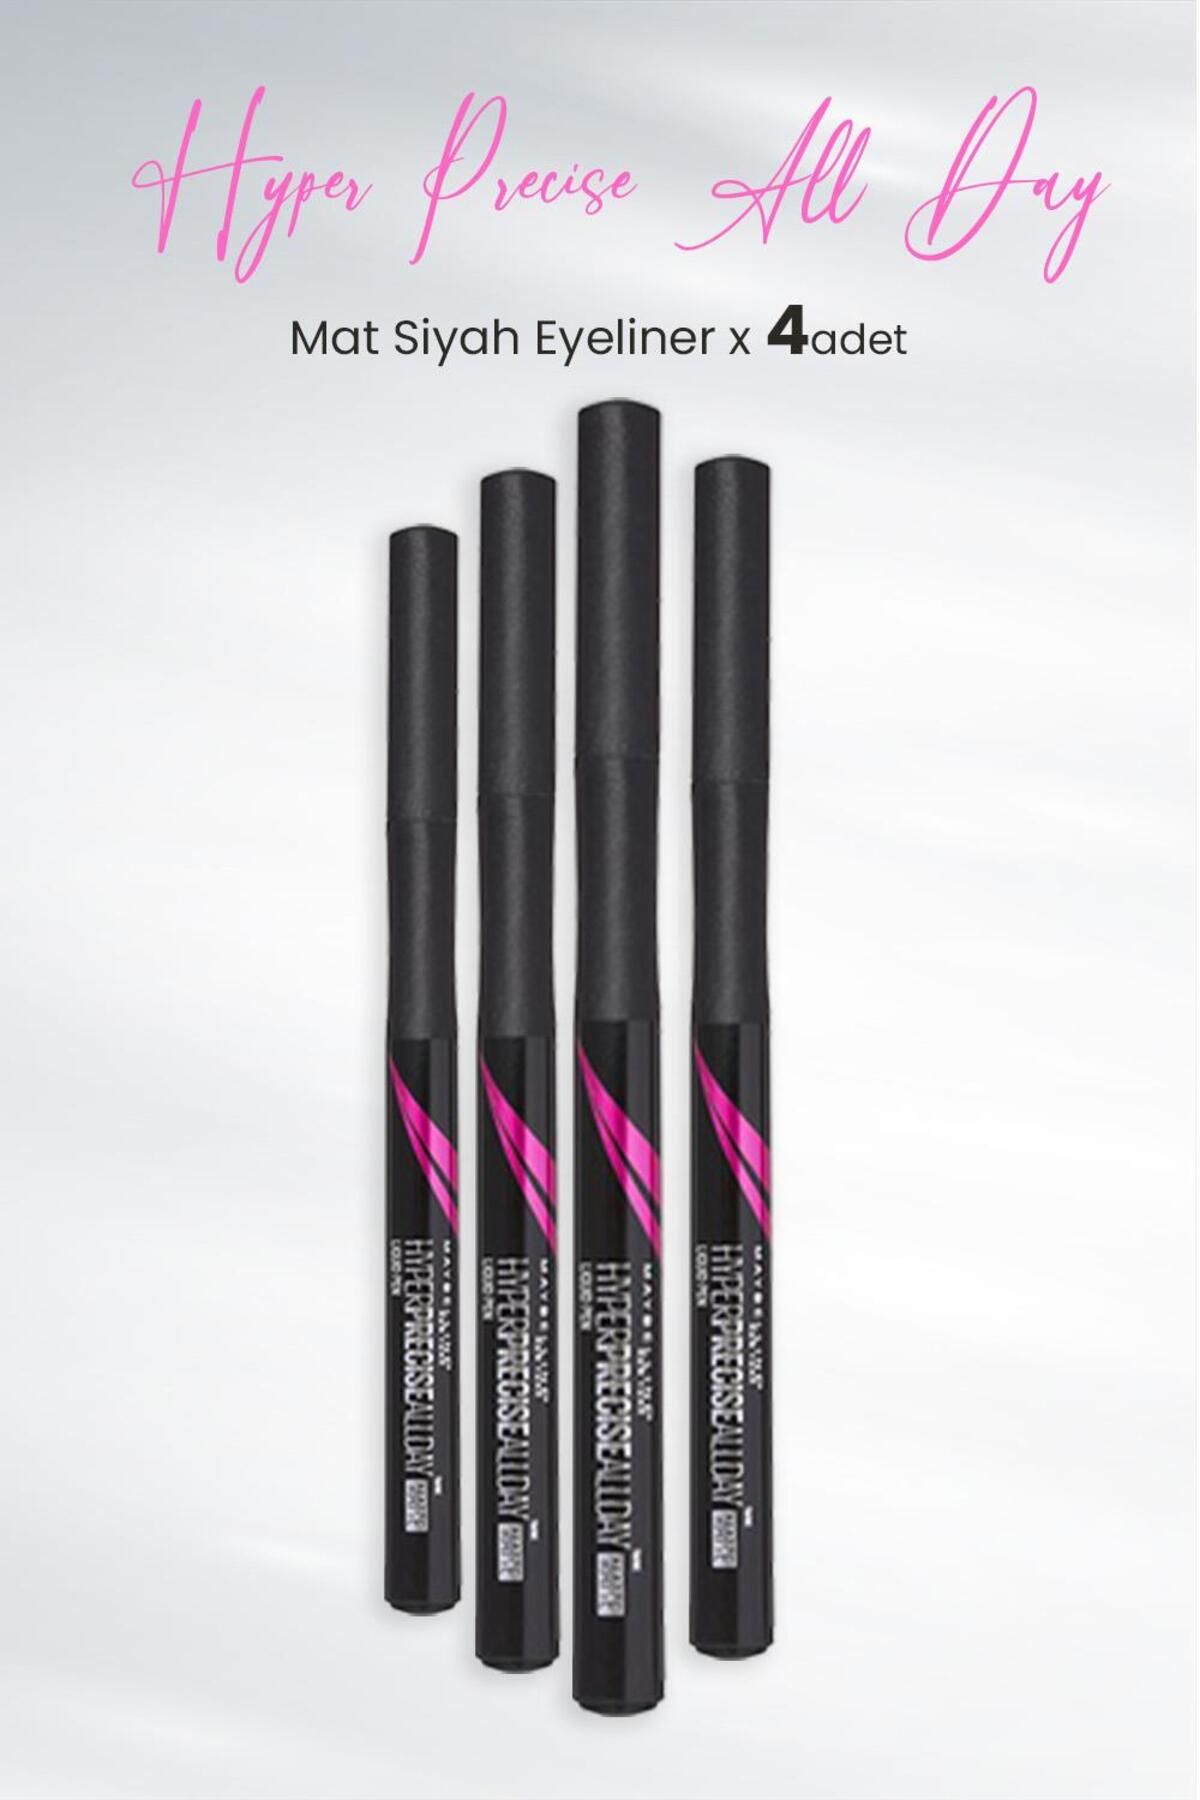 Maybelline New York Eyeliner Hyper Precise All Day Mat Siyah X 4 Adet